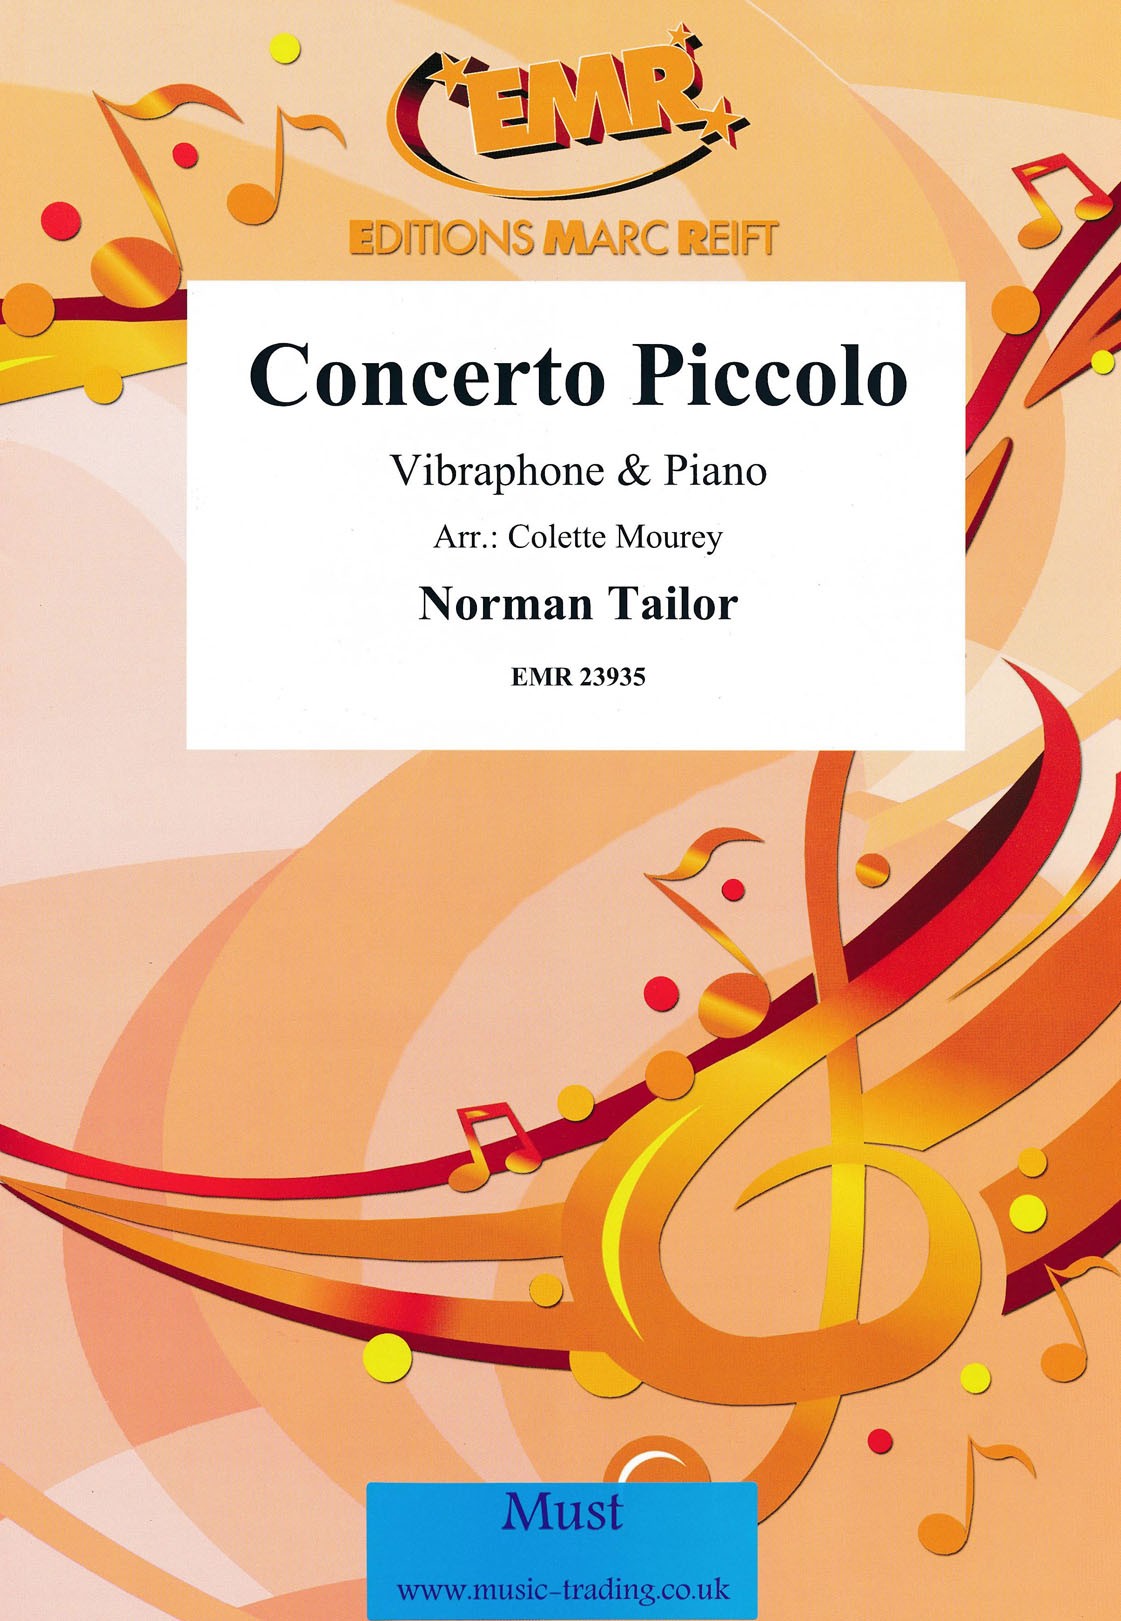 Concerto Piccolo by Norman Tailor